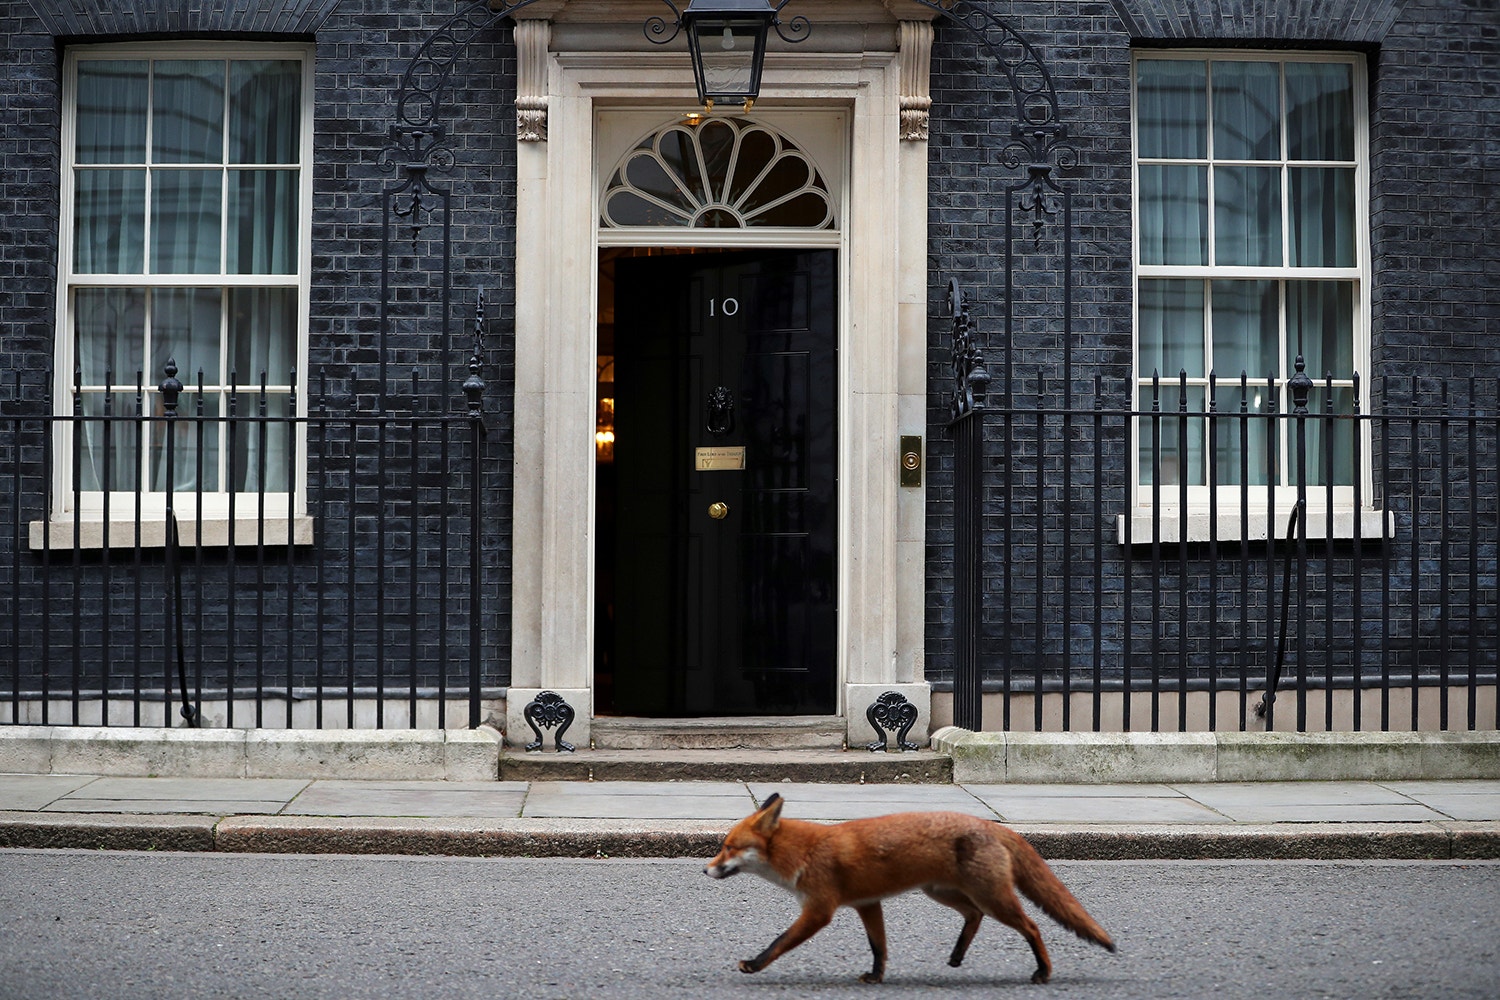  Um &quot;visitante&quot; passa pela resid&ecirc;ncia oficial da primeira-ministra inglesa em Downing Street /Hannah Mckay - Reuters 